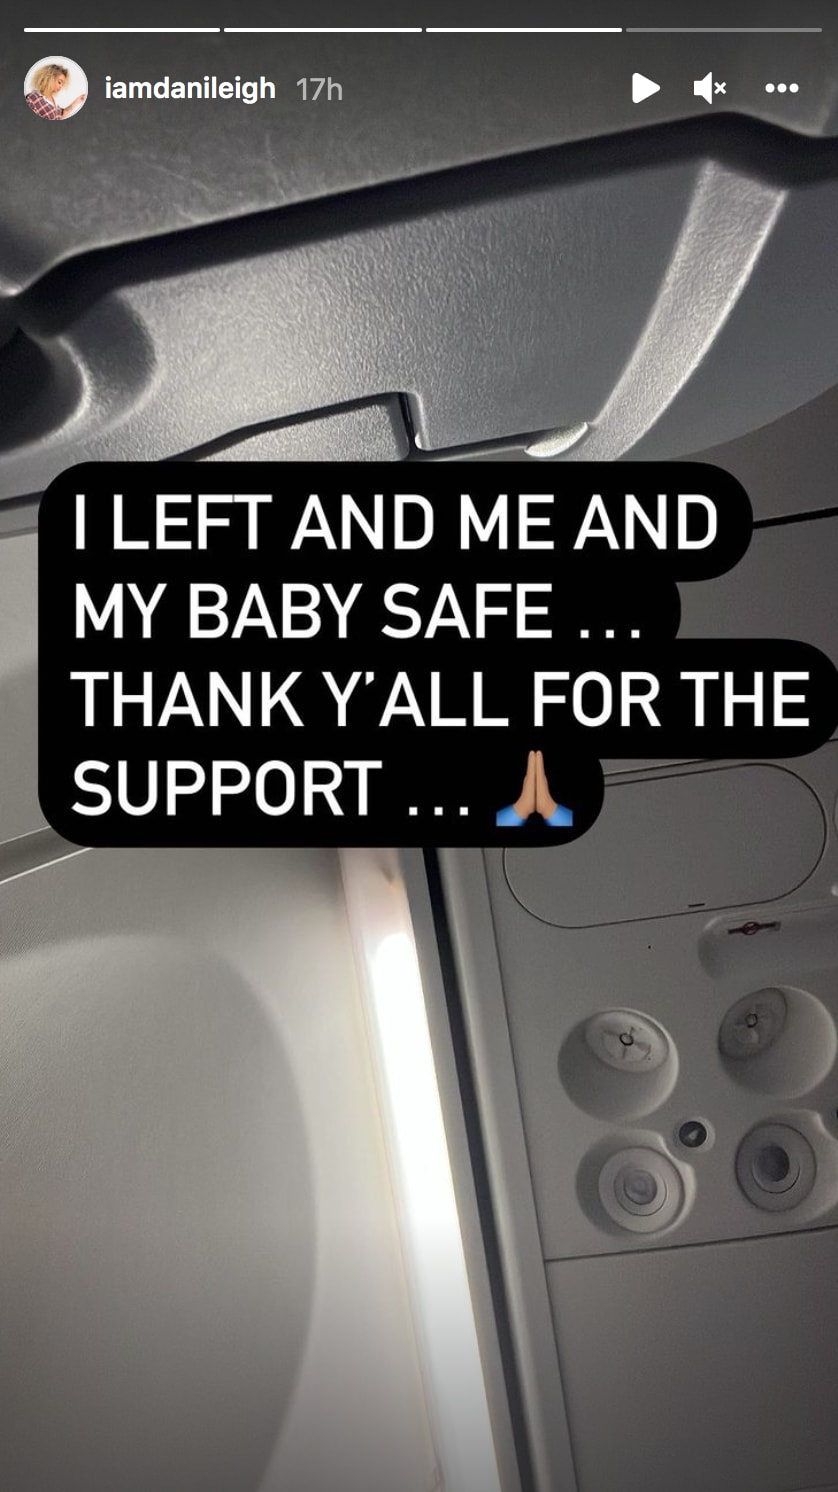 An Instagram update from DaniLeigh is shown.